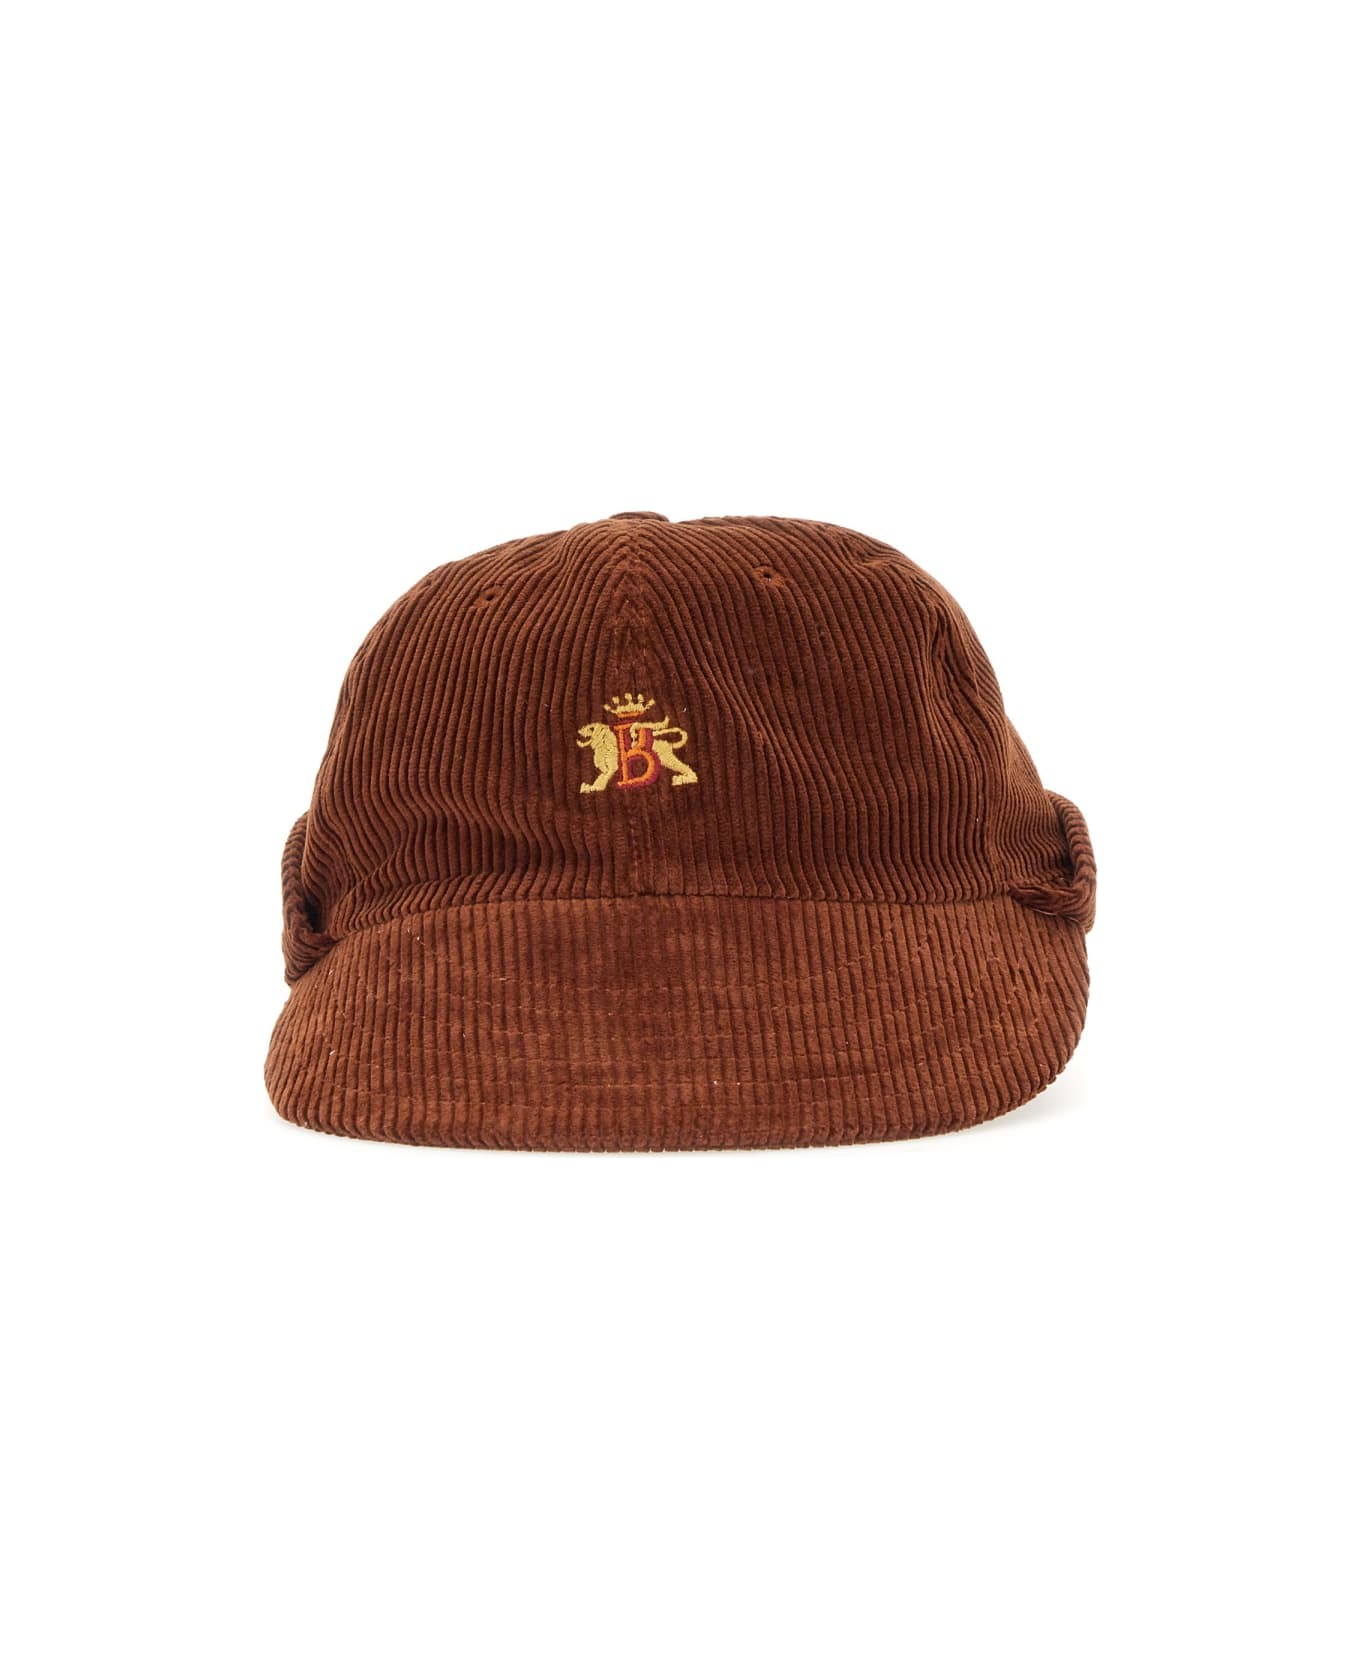 Baracuta Hat With Logo - BROWN